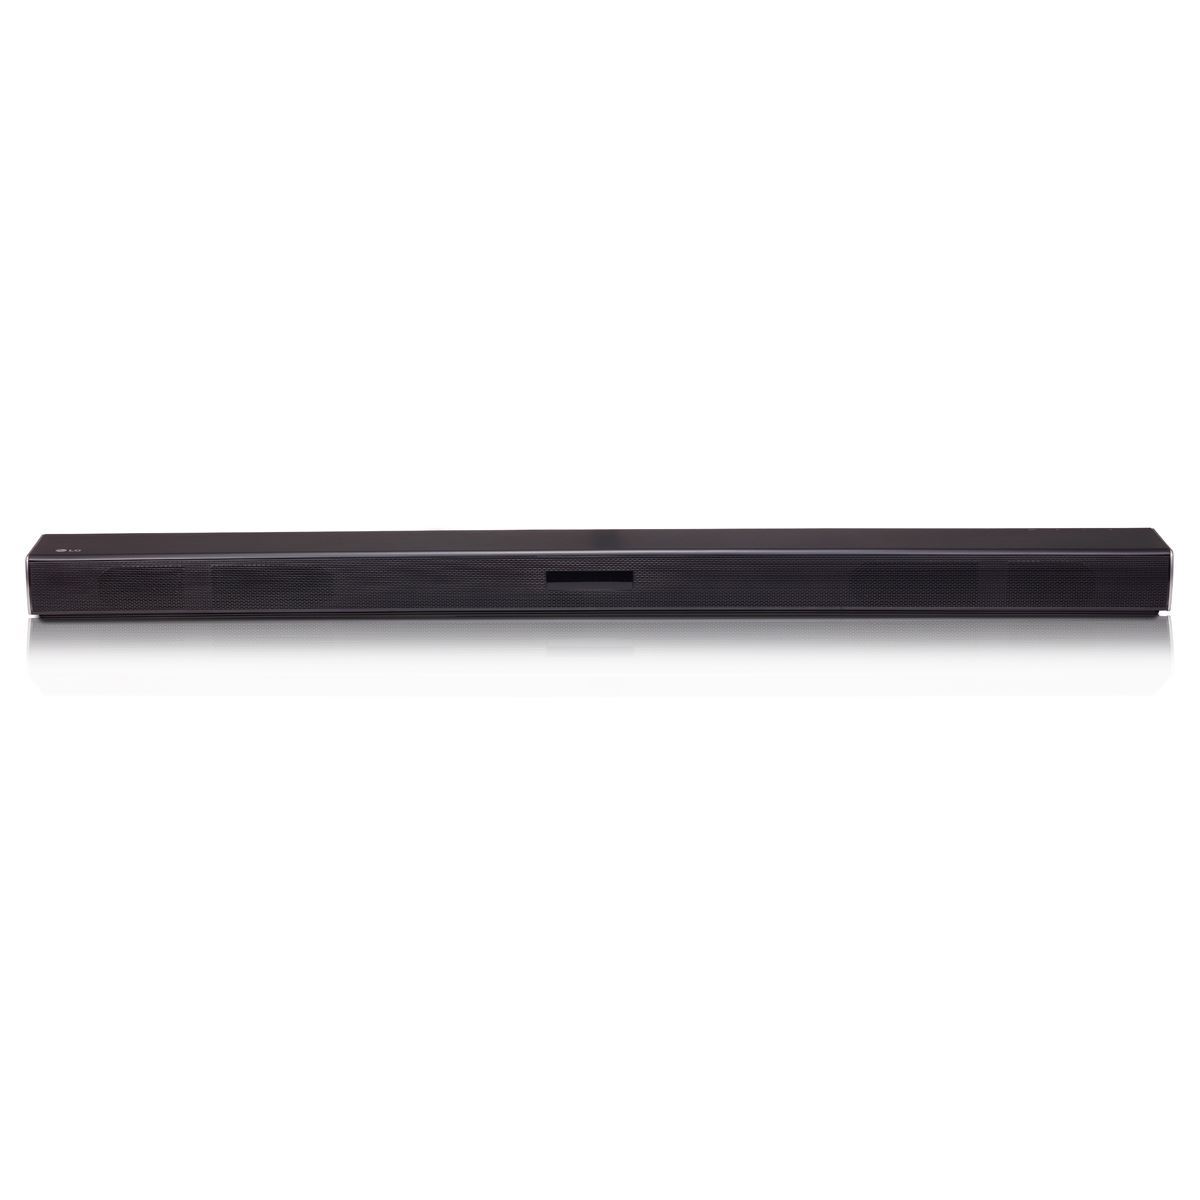 Bundle Pantalla LG 49” 49UH6500 UHD Smar Tv + Sound Bar LG SH4